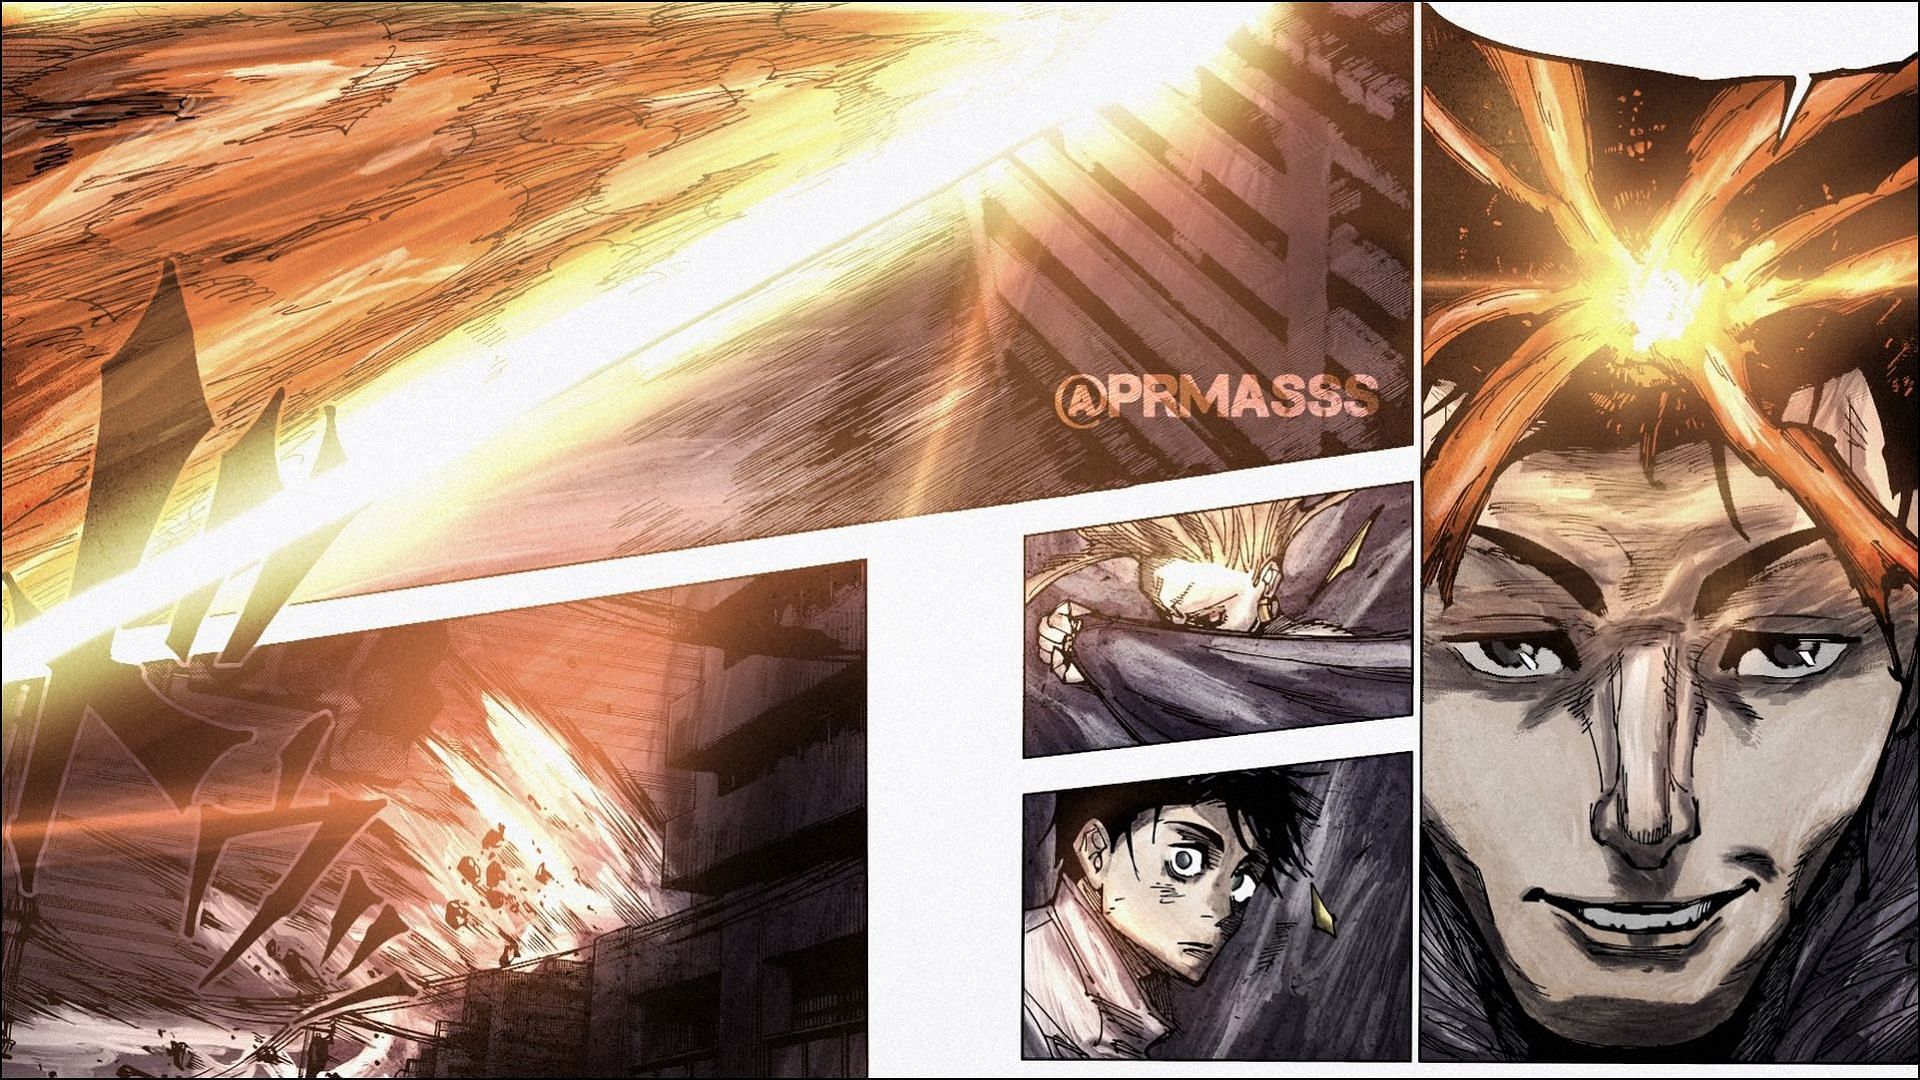 Ishigori launches his attack in the Jujutsu Kaisen manga (Image via Shueisha, colorization by @PRMASSS)